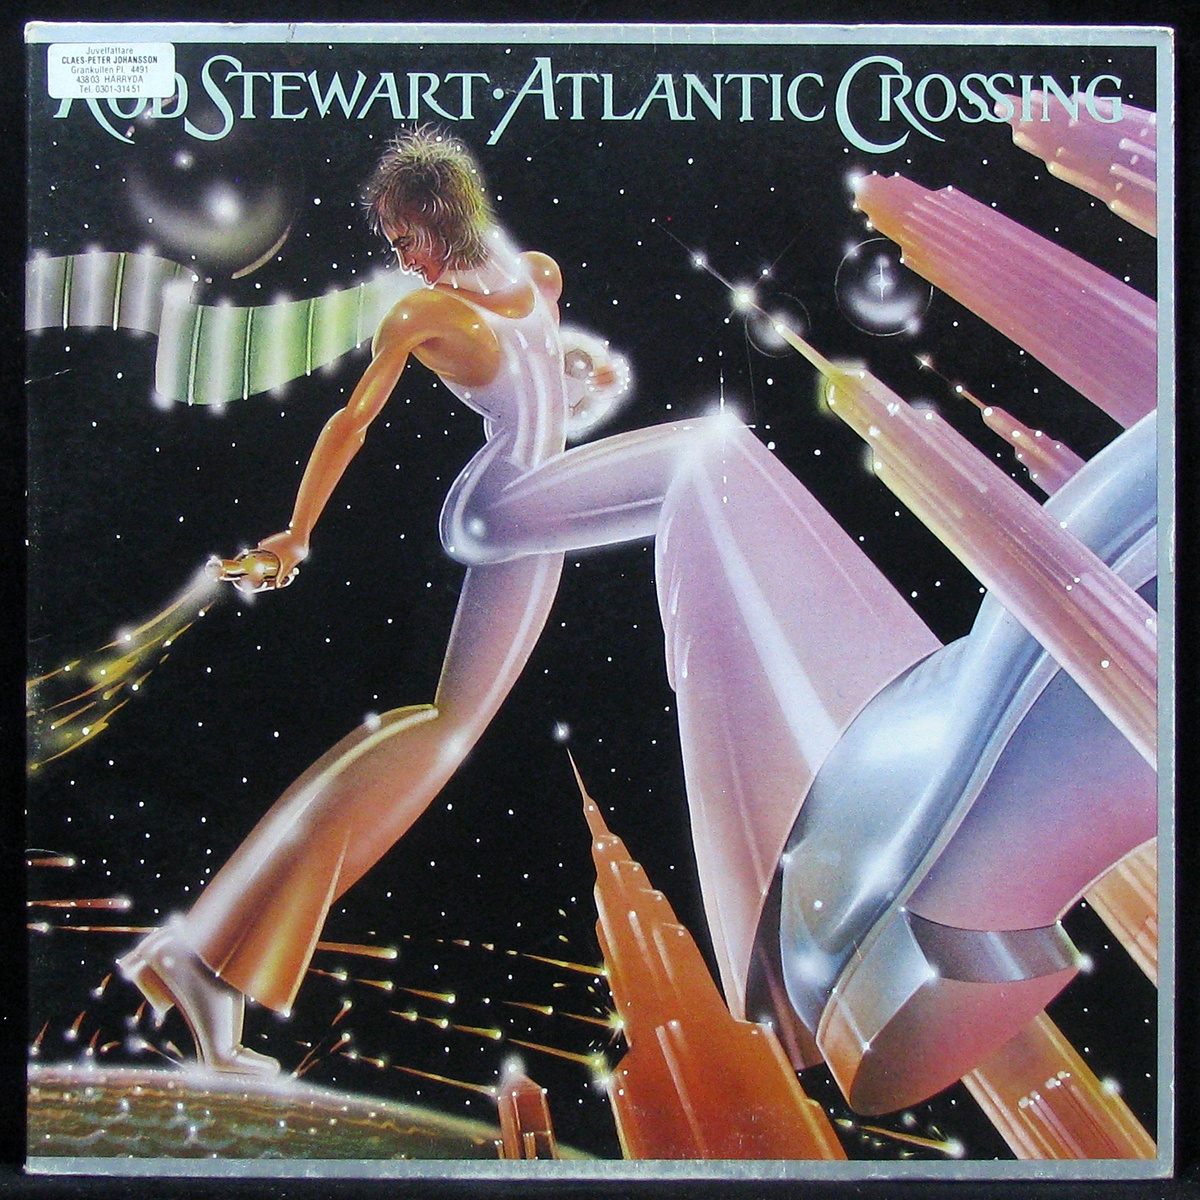 LP Rod Stewart — Atlantic Crossing фото